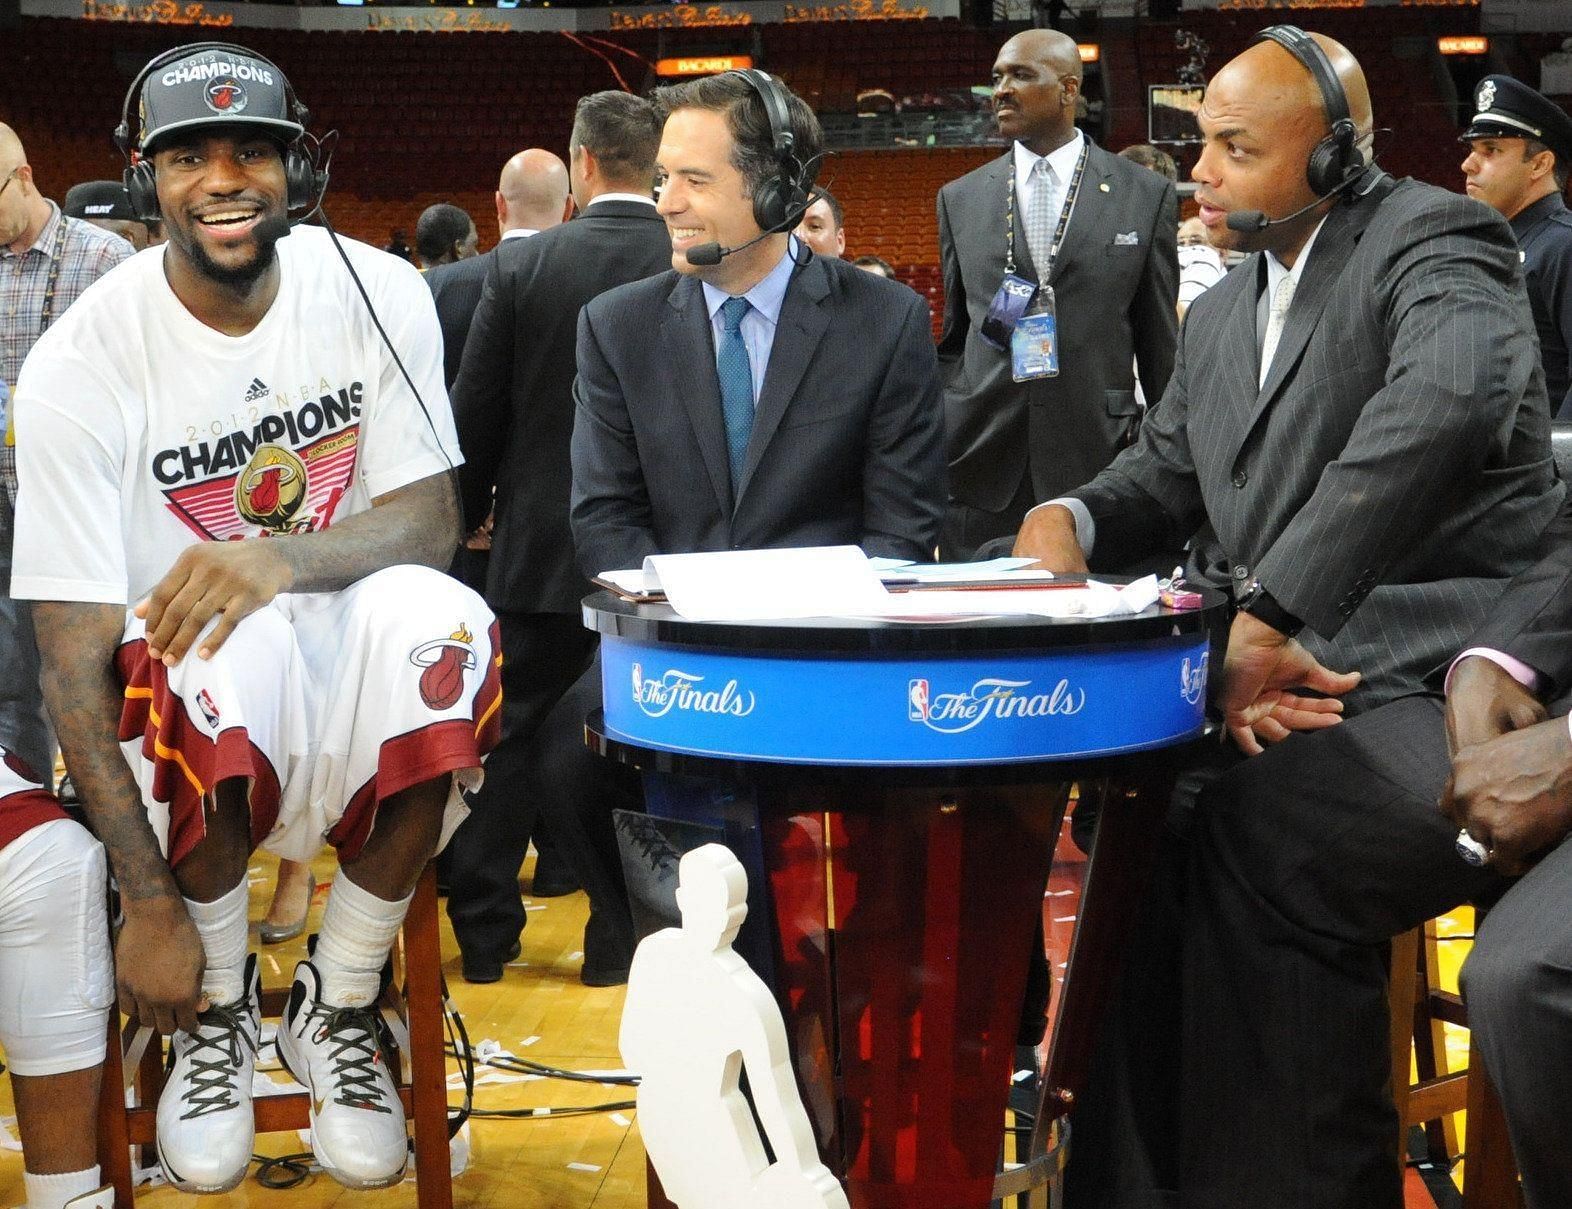 Charles Barkley (far right) interviews Finals MVP LeBron James (far left) after the 2012 NBA Finals